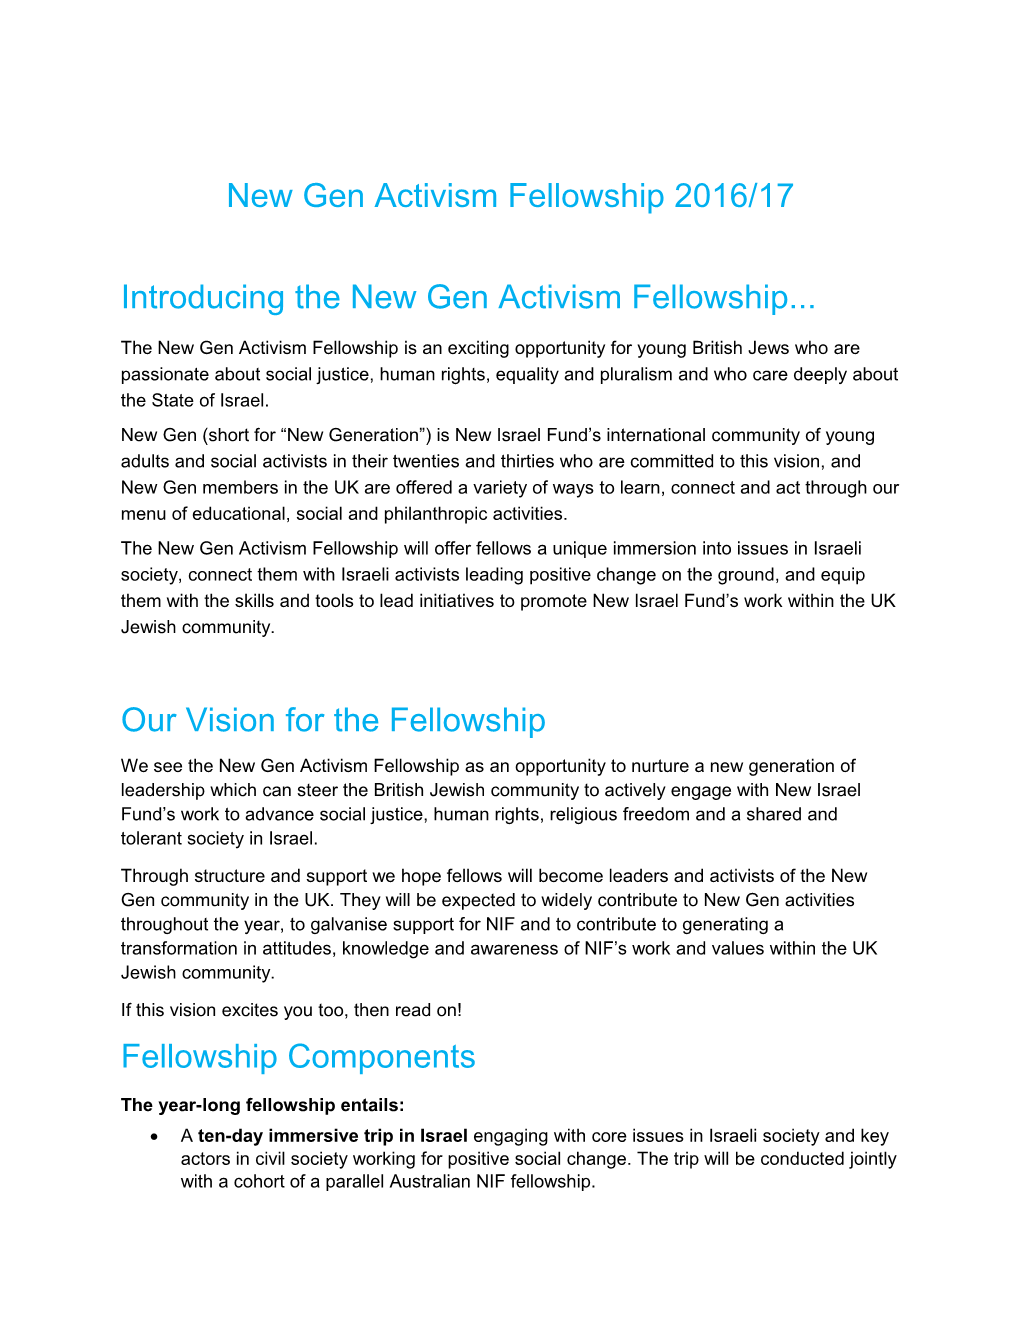 NIF New Gen Activism Fellowship 2015-201